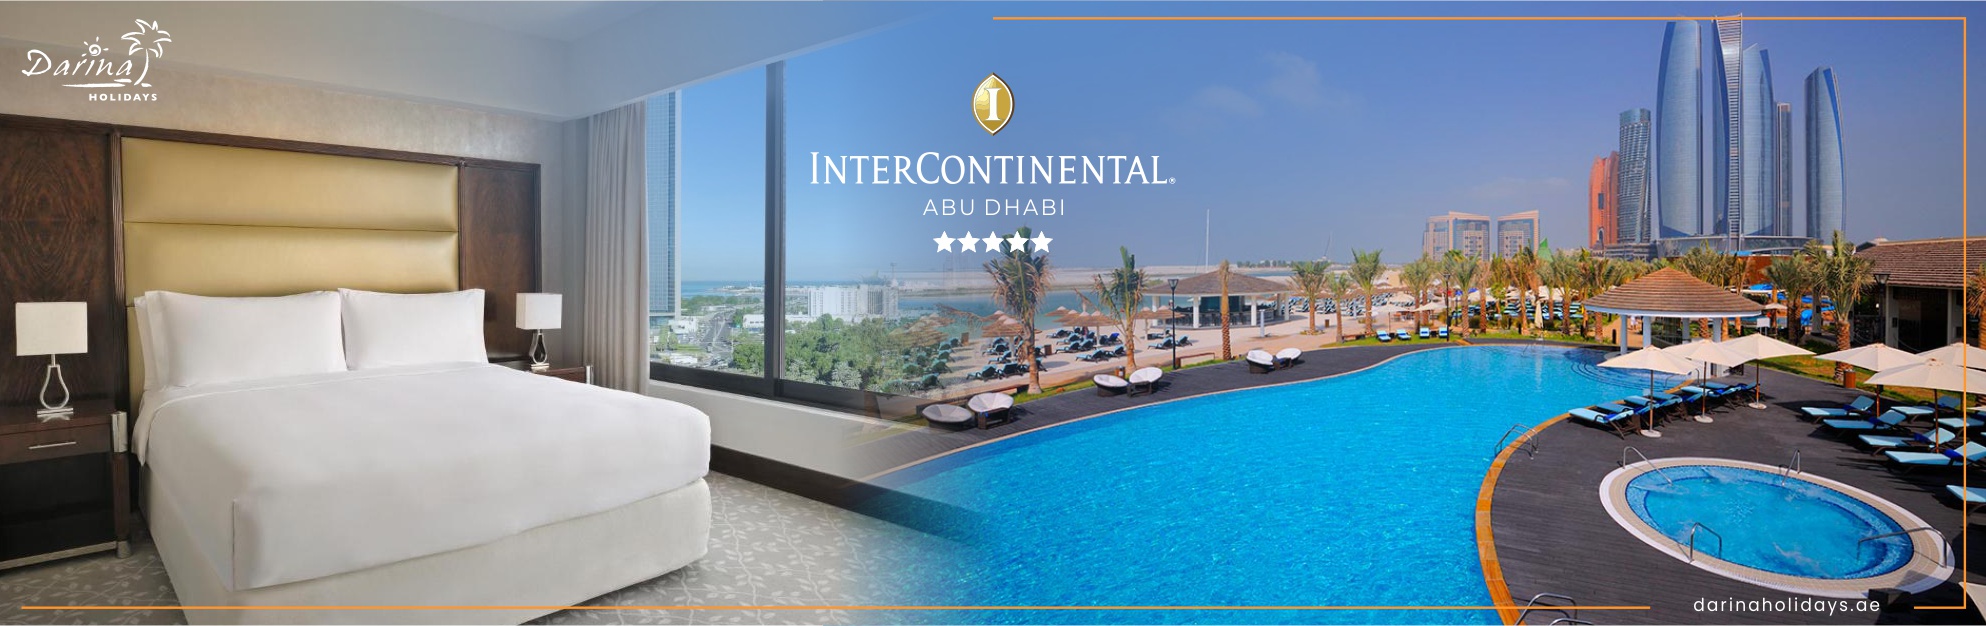 Intercontinental Abu Dhabi, 5